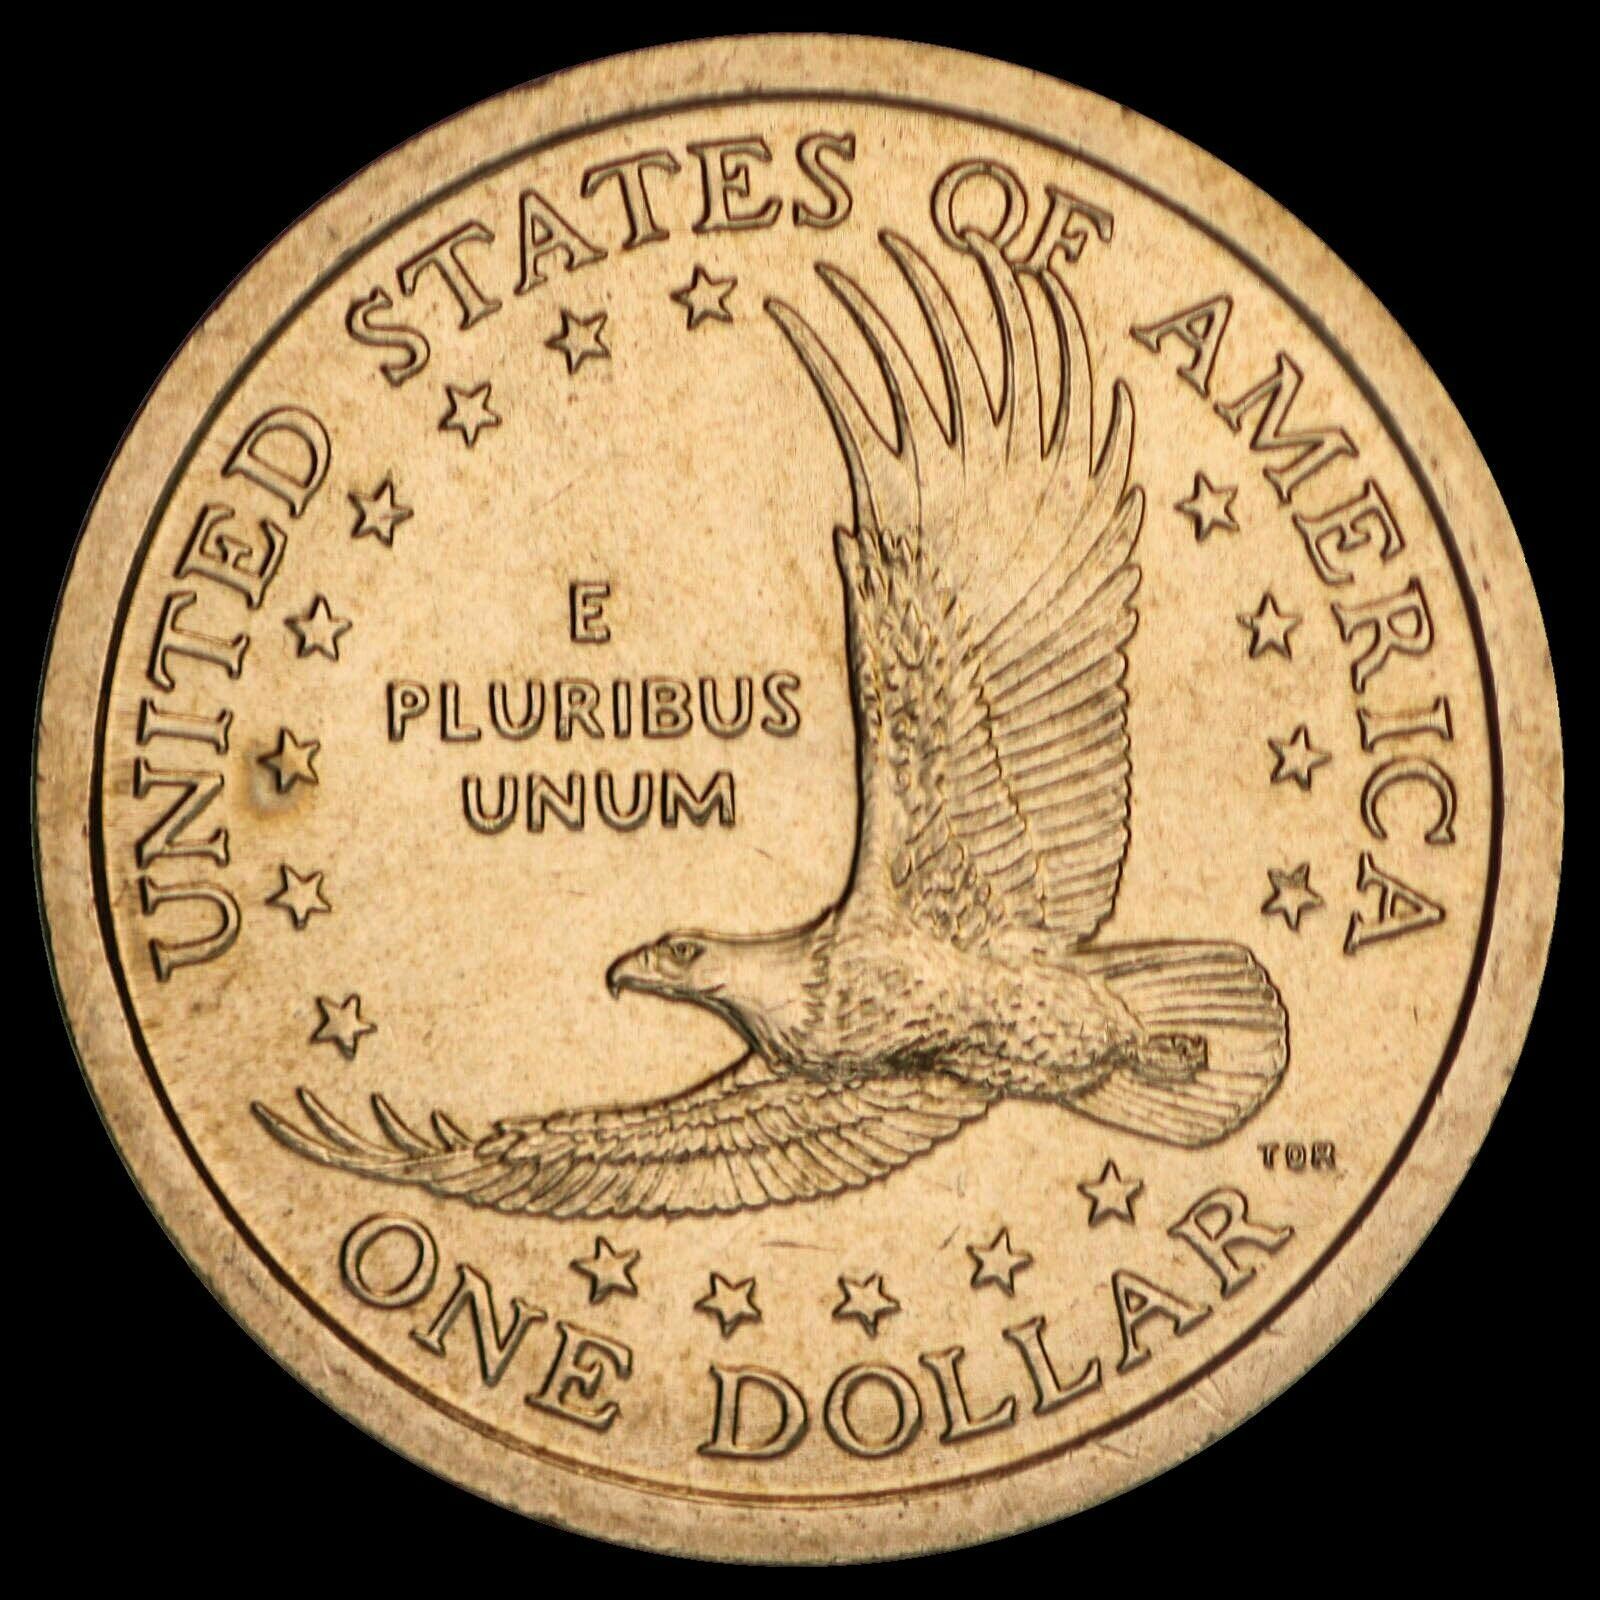 2000 P Sacagawea Dollar US Mint Coin in 